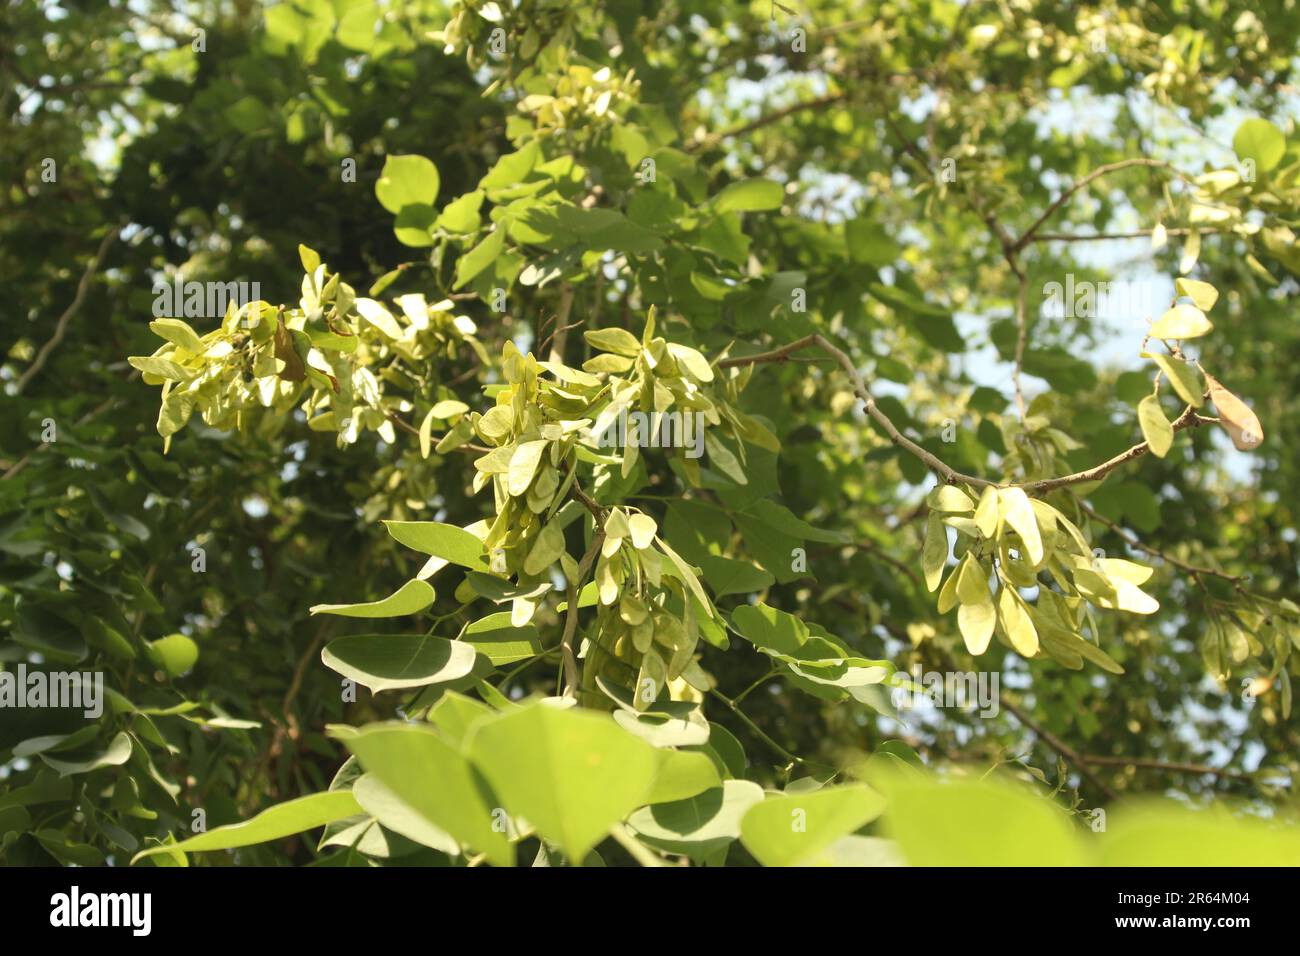 Indian rosewood, Dalbergia sissoo, shisham Stock Photo